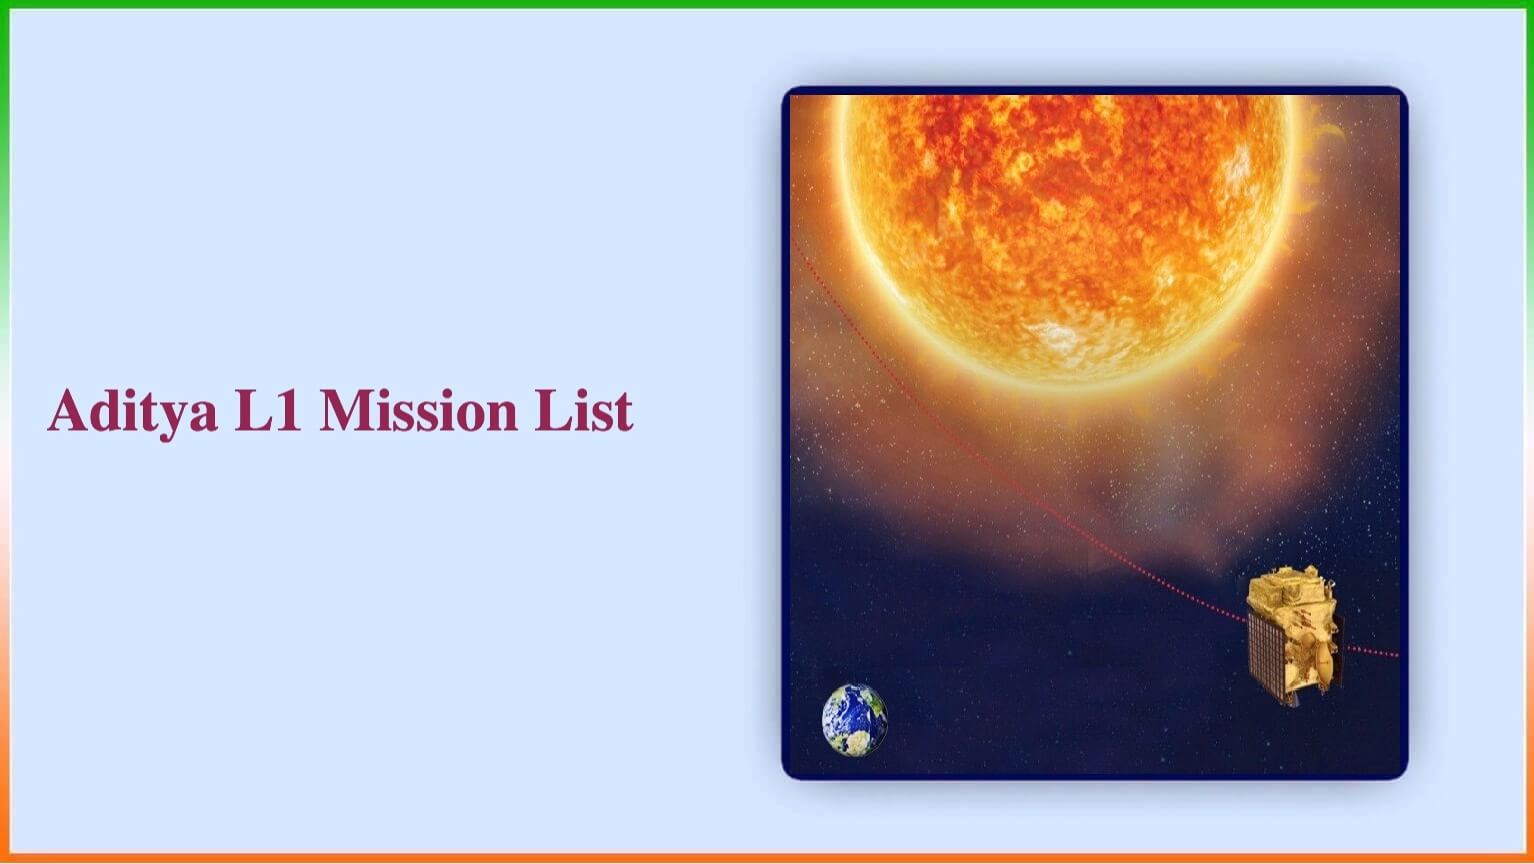 Aditya L1 Mission List